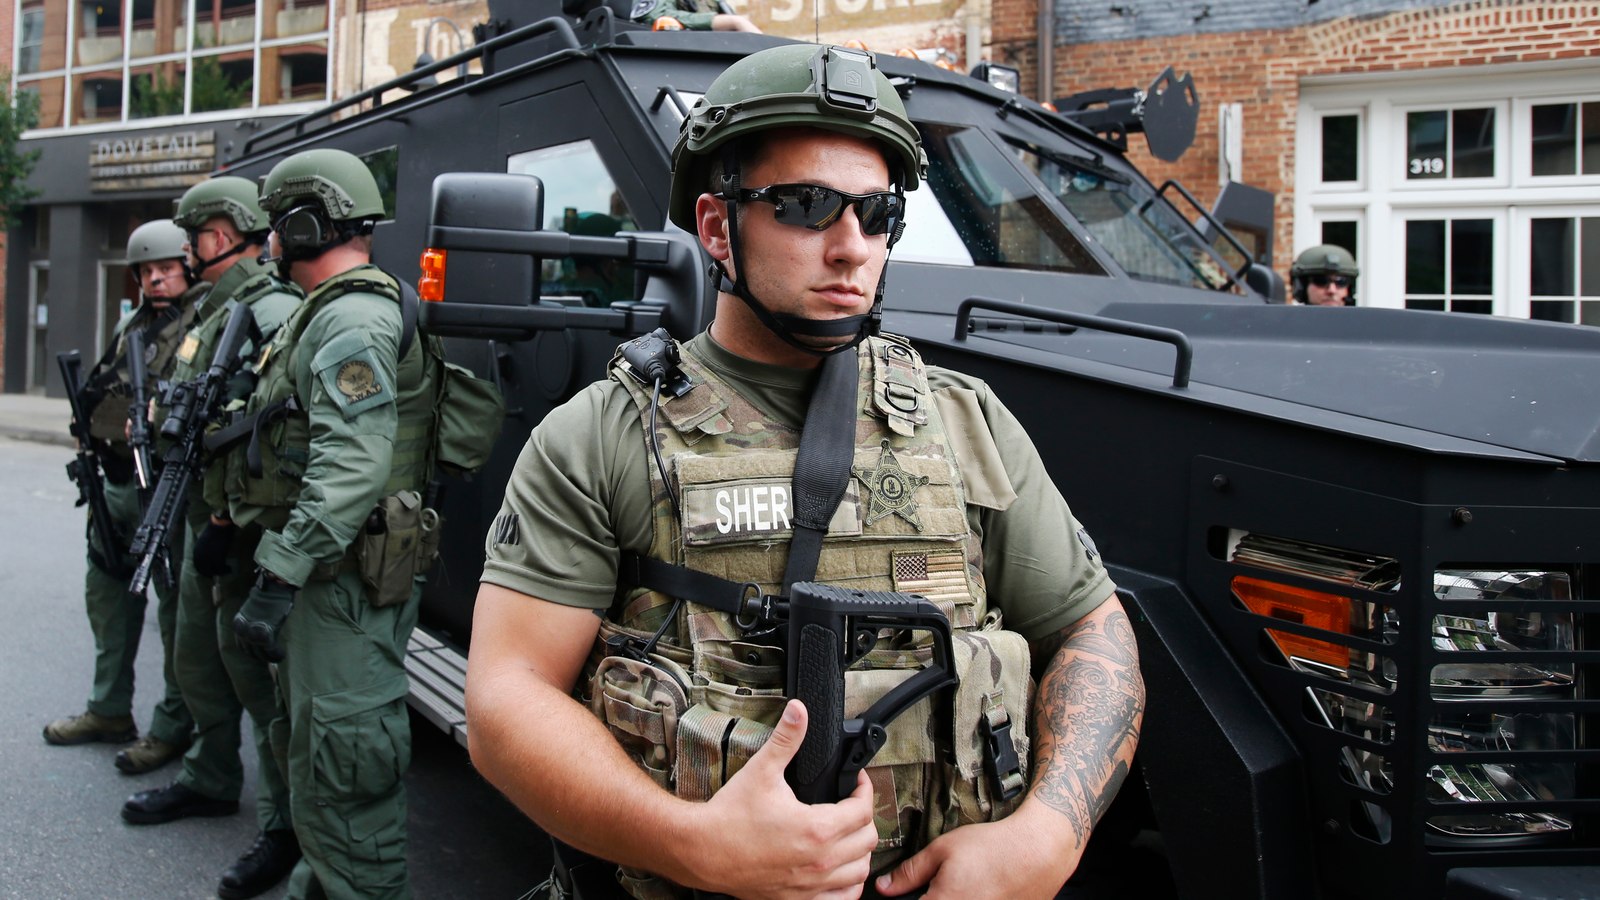 swat tactical gear